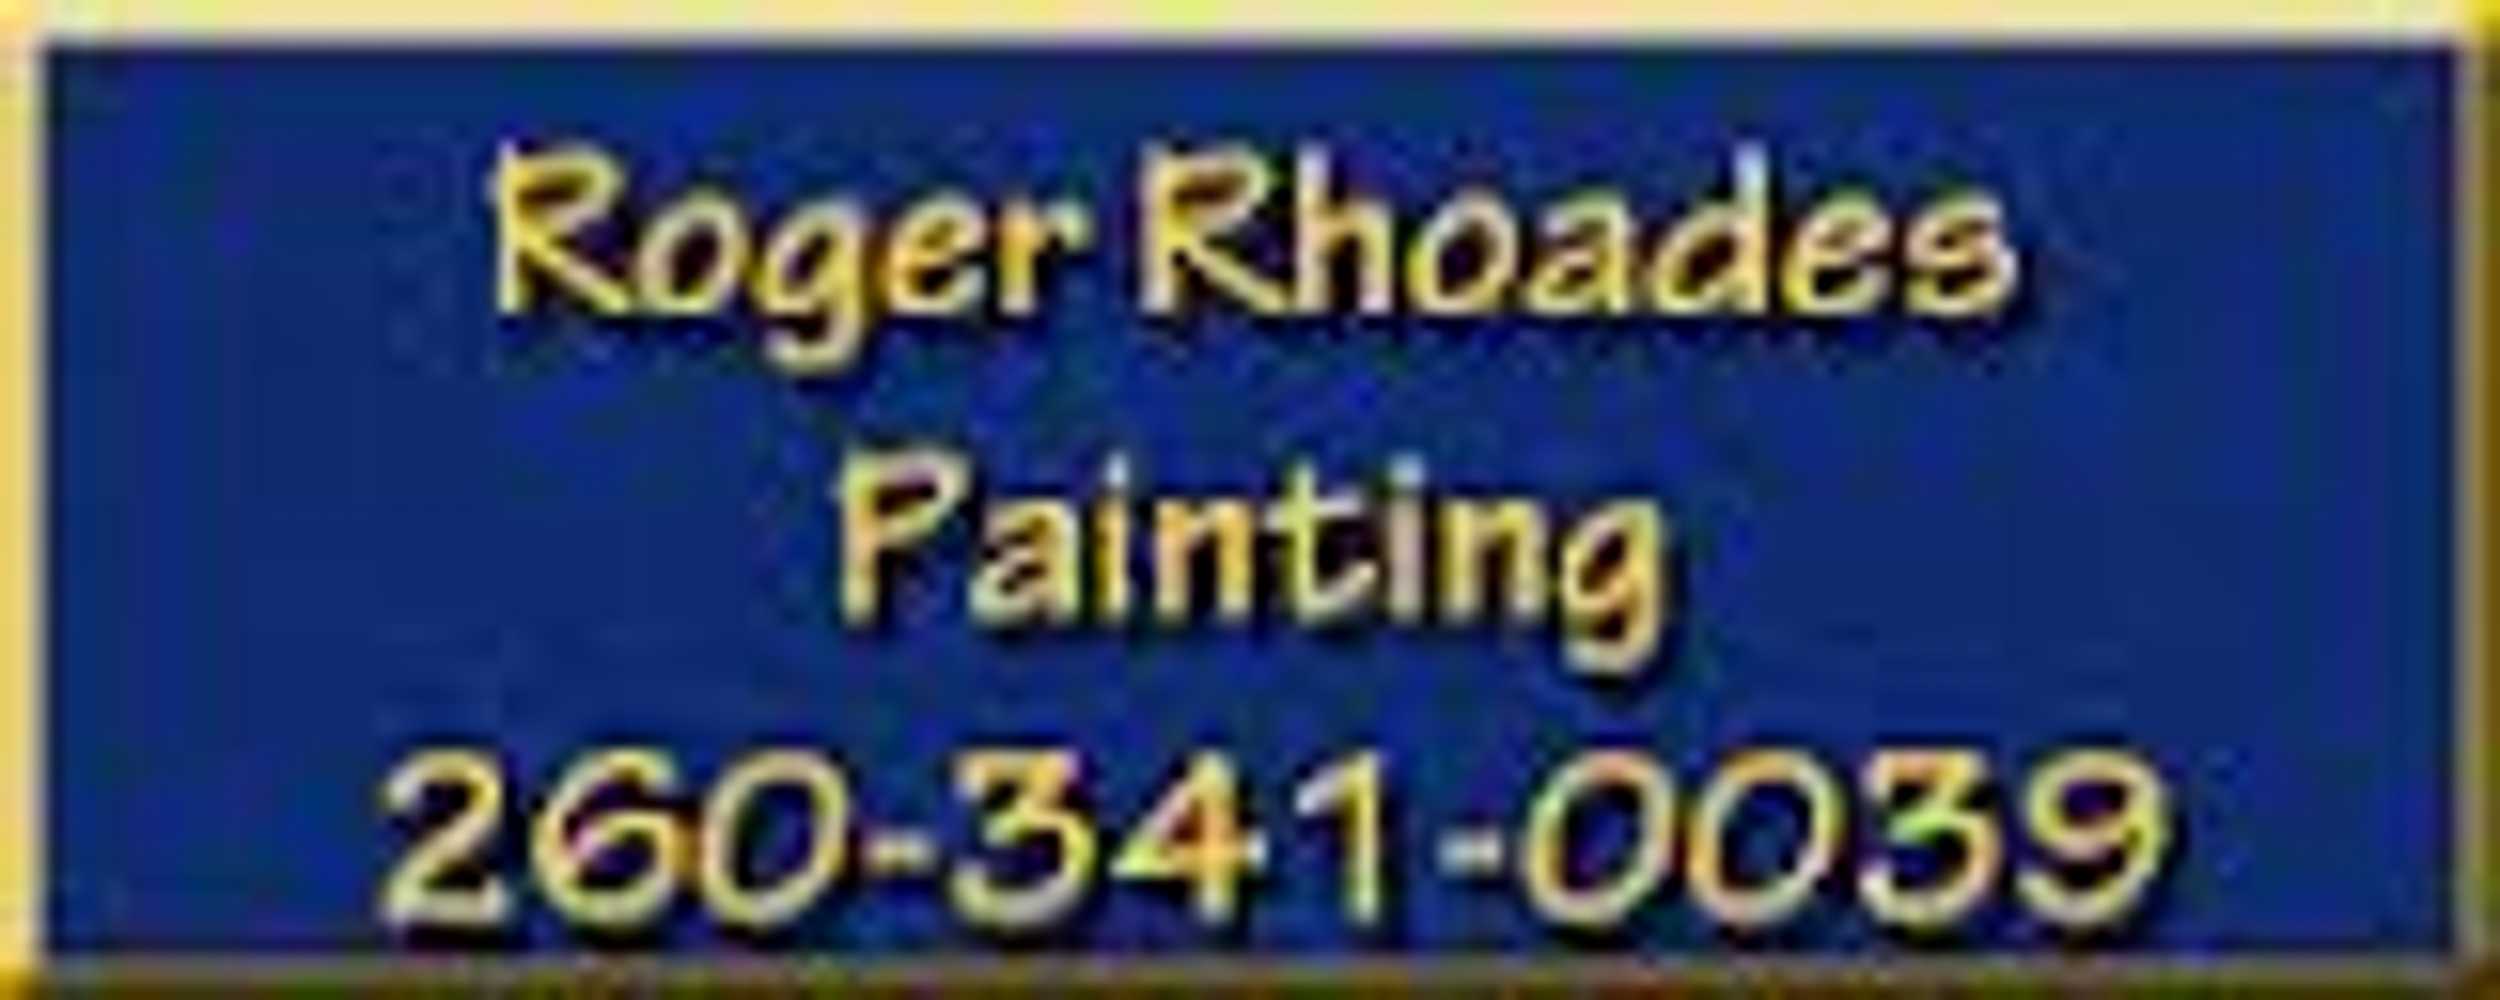 Roger Rhoades Painting